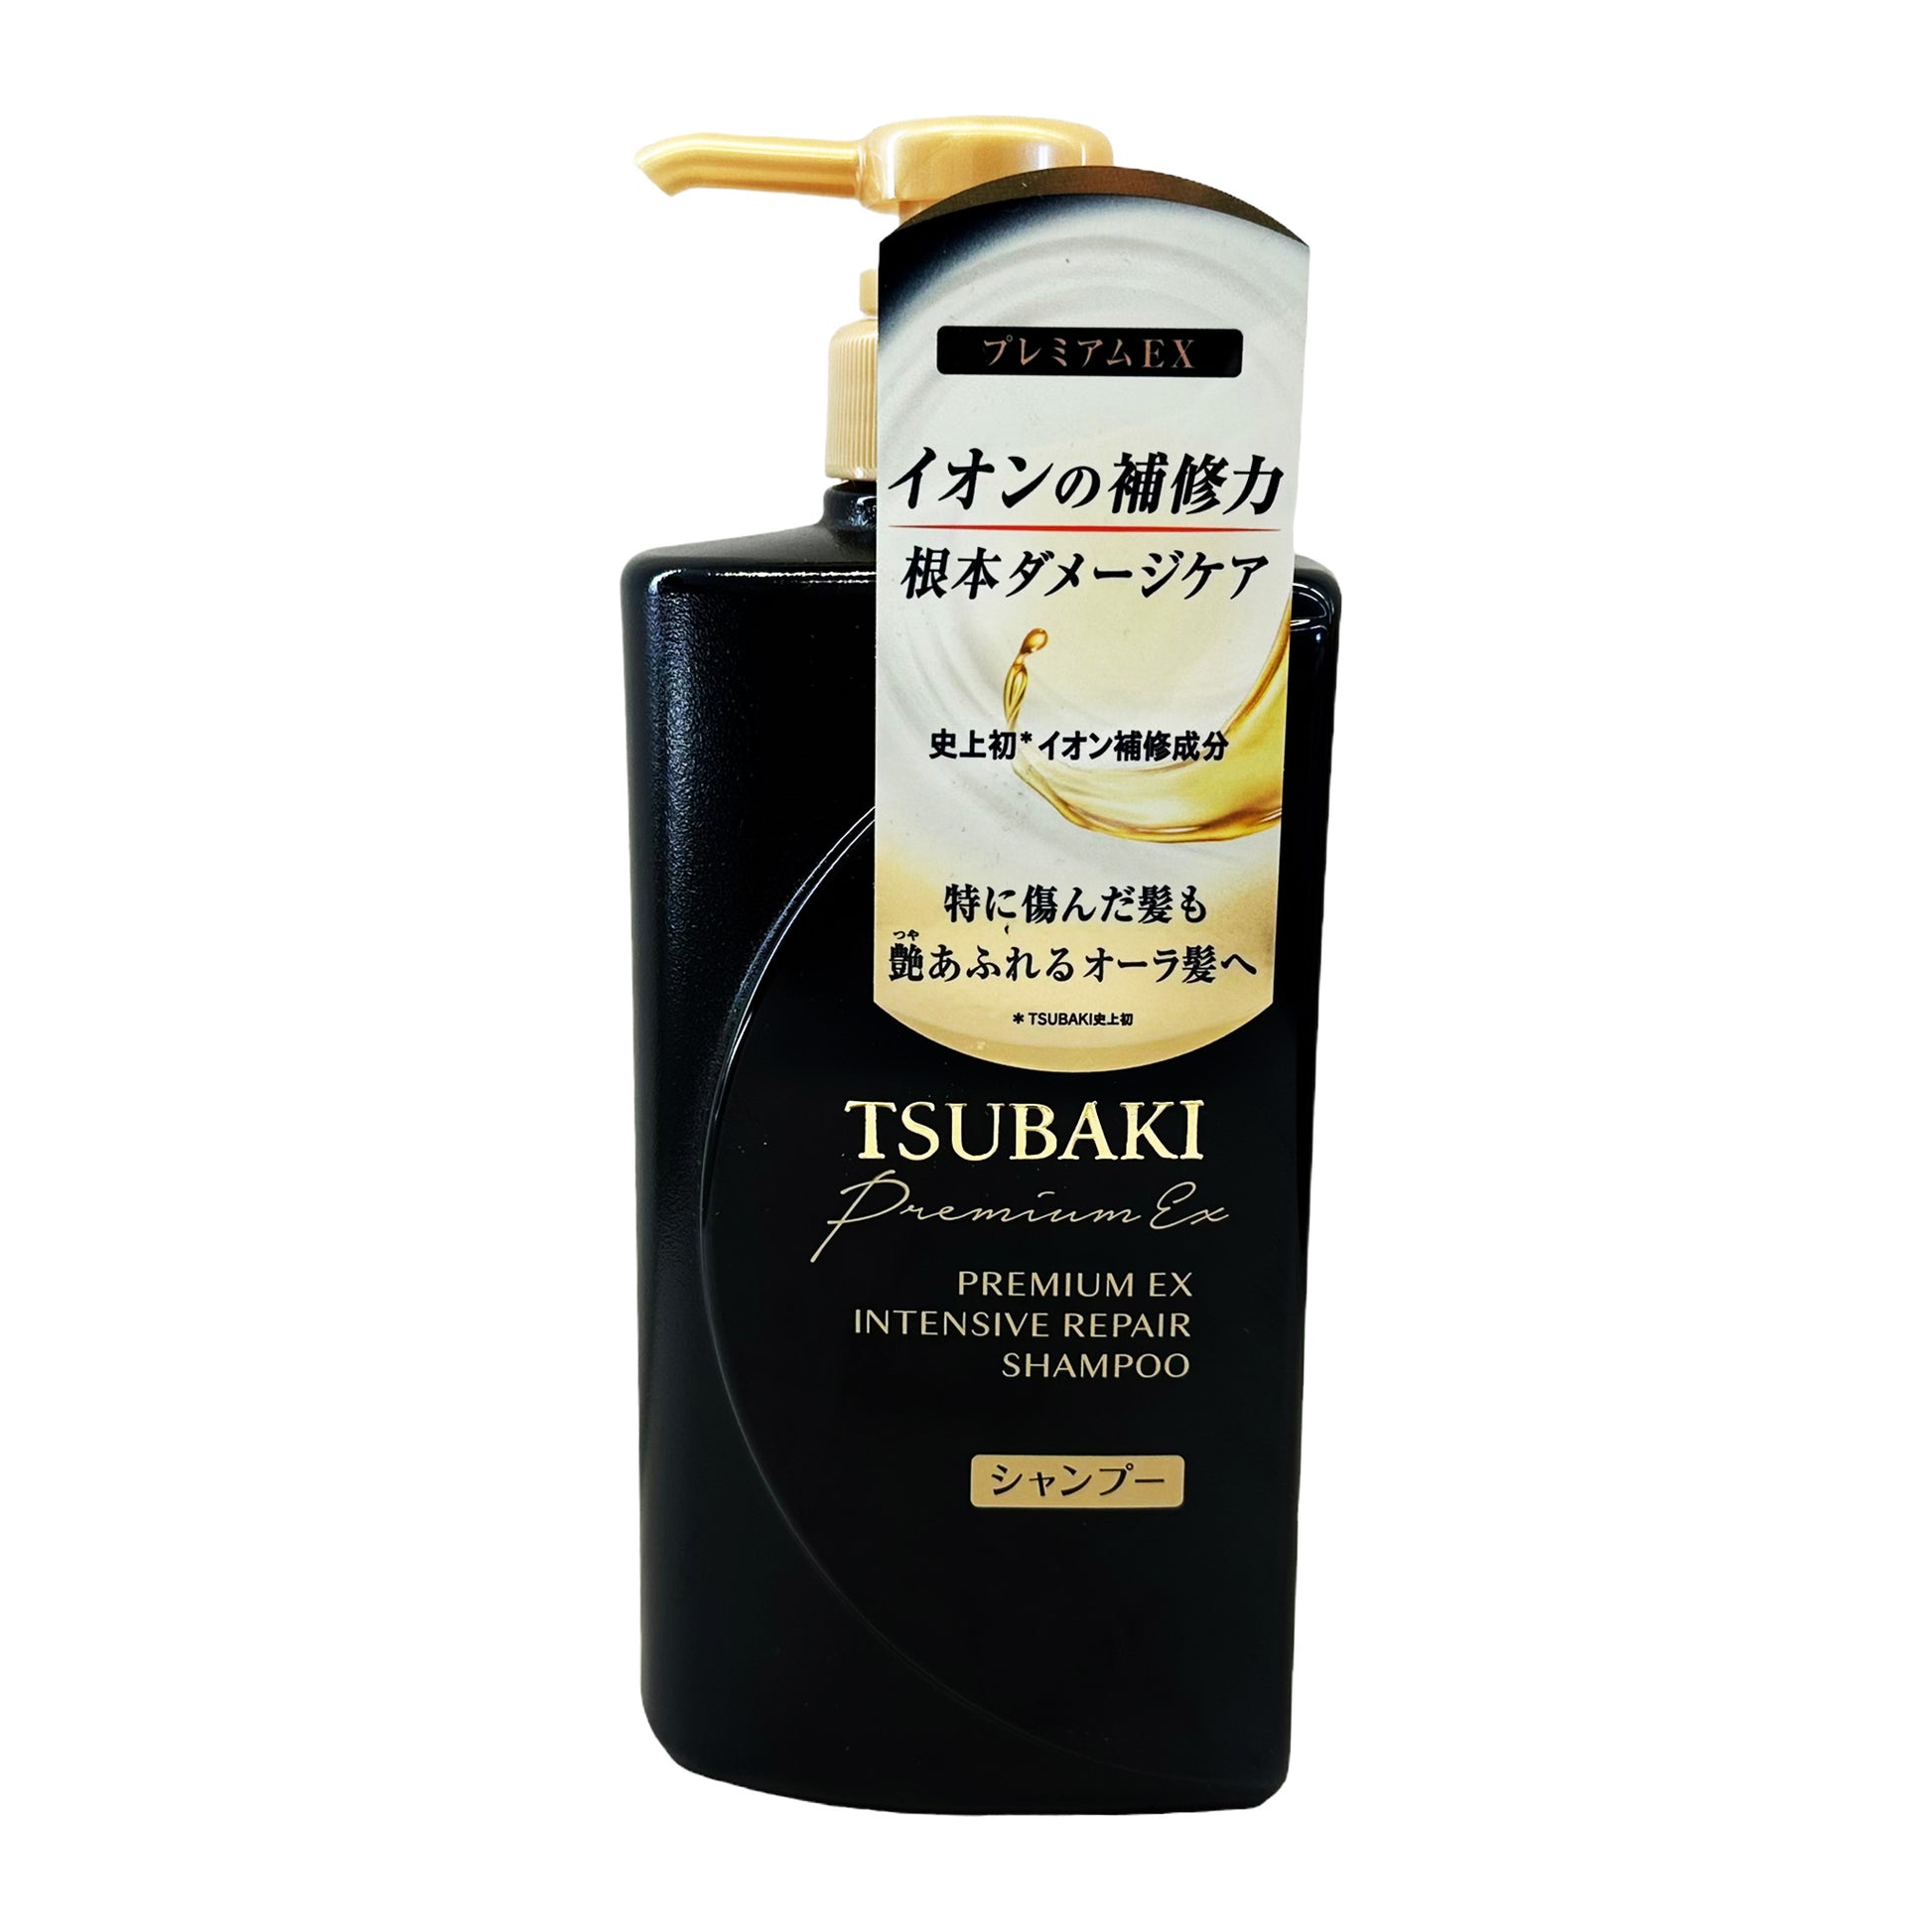 Front graphic image of Shiseido Tsubaki Premium EX Intensive Repair - Shampoo 16.6oz (490ml)